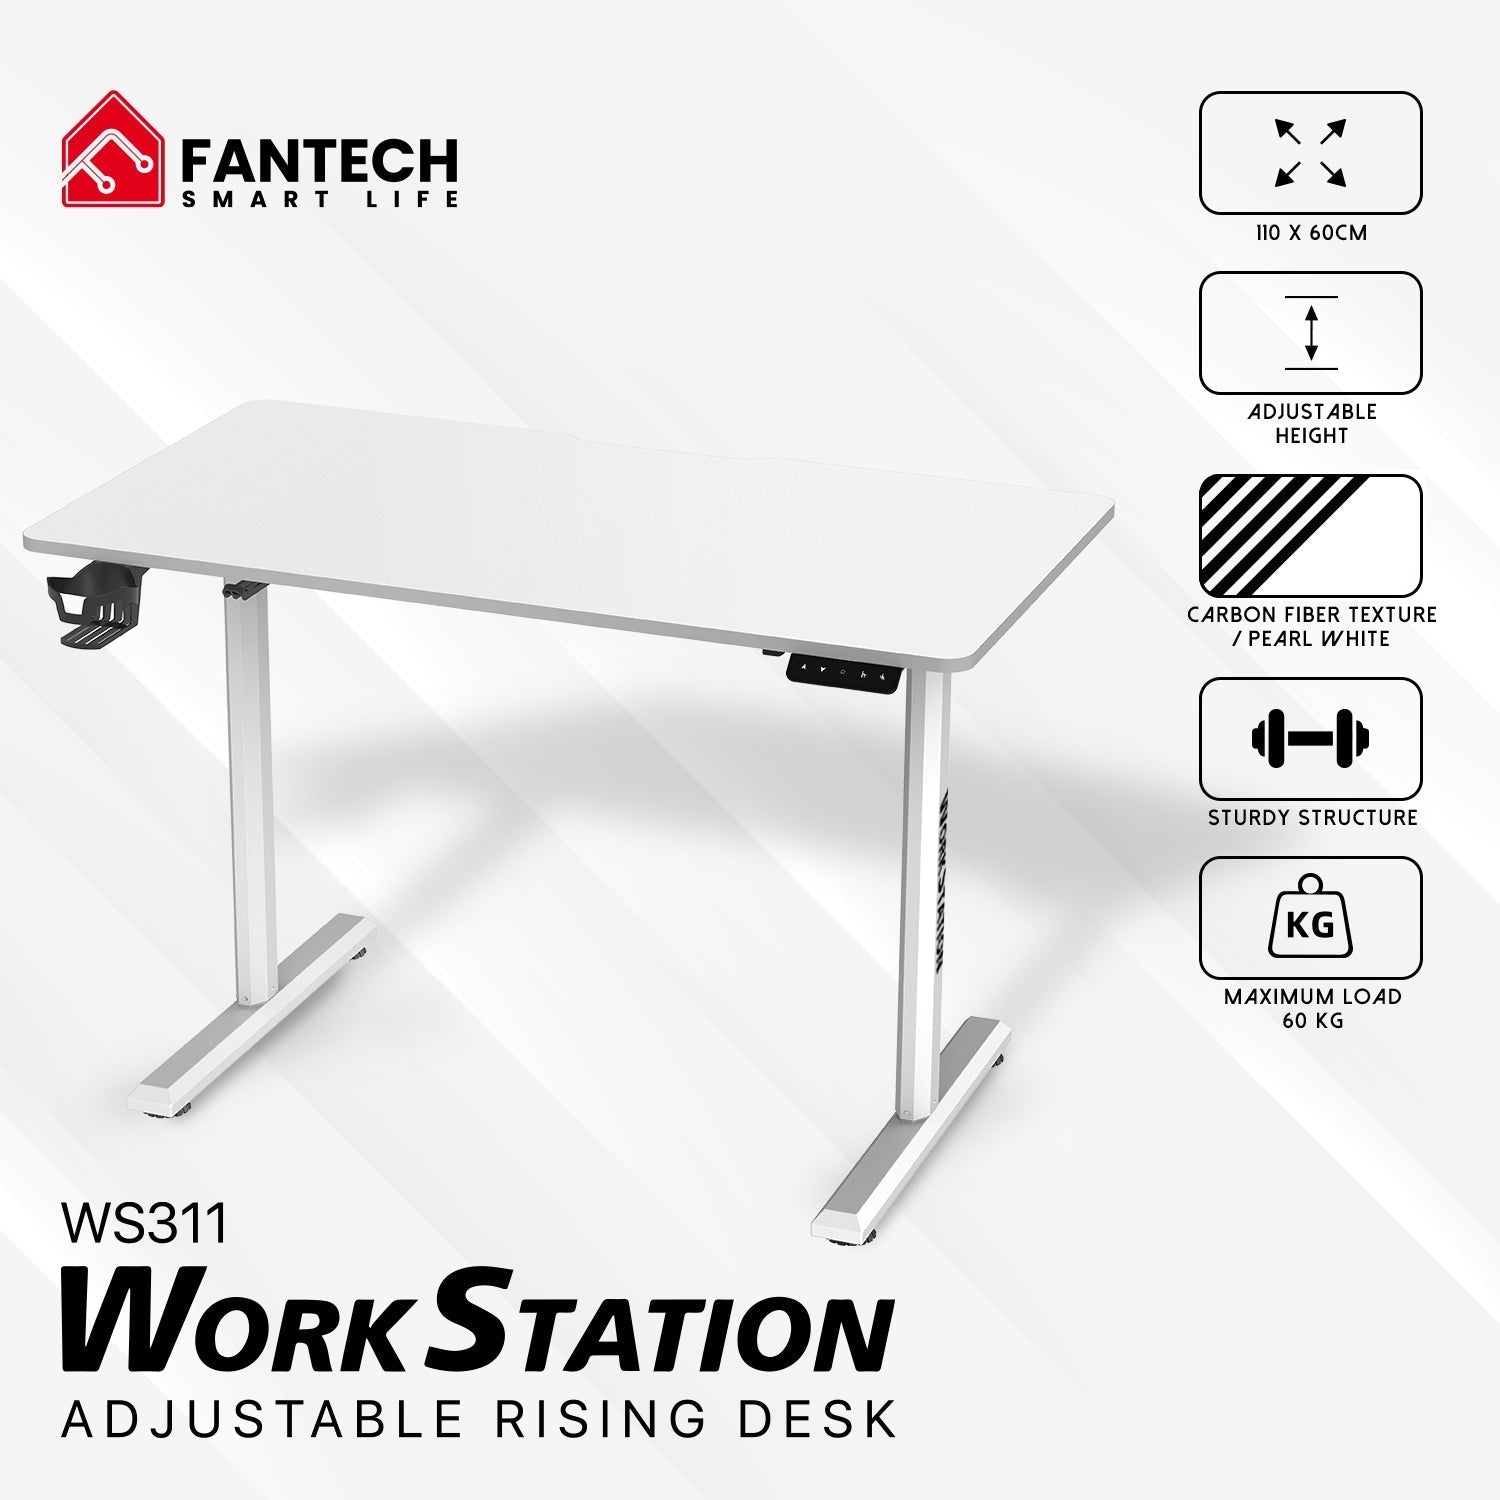 Fantech WS311 Work Station Adjustable Rising Desk JOD 130